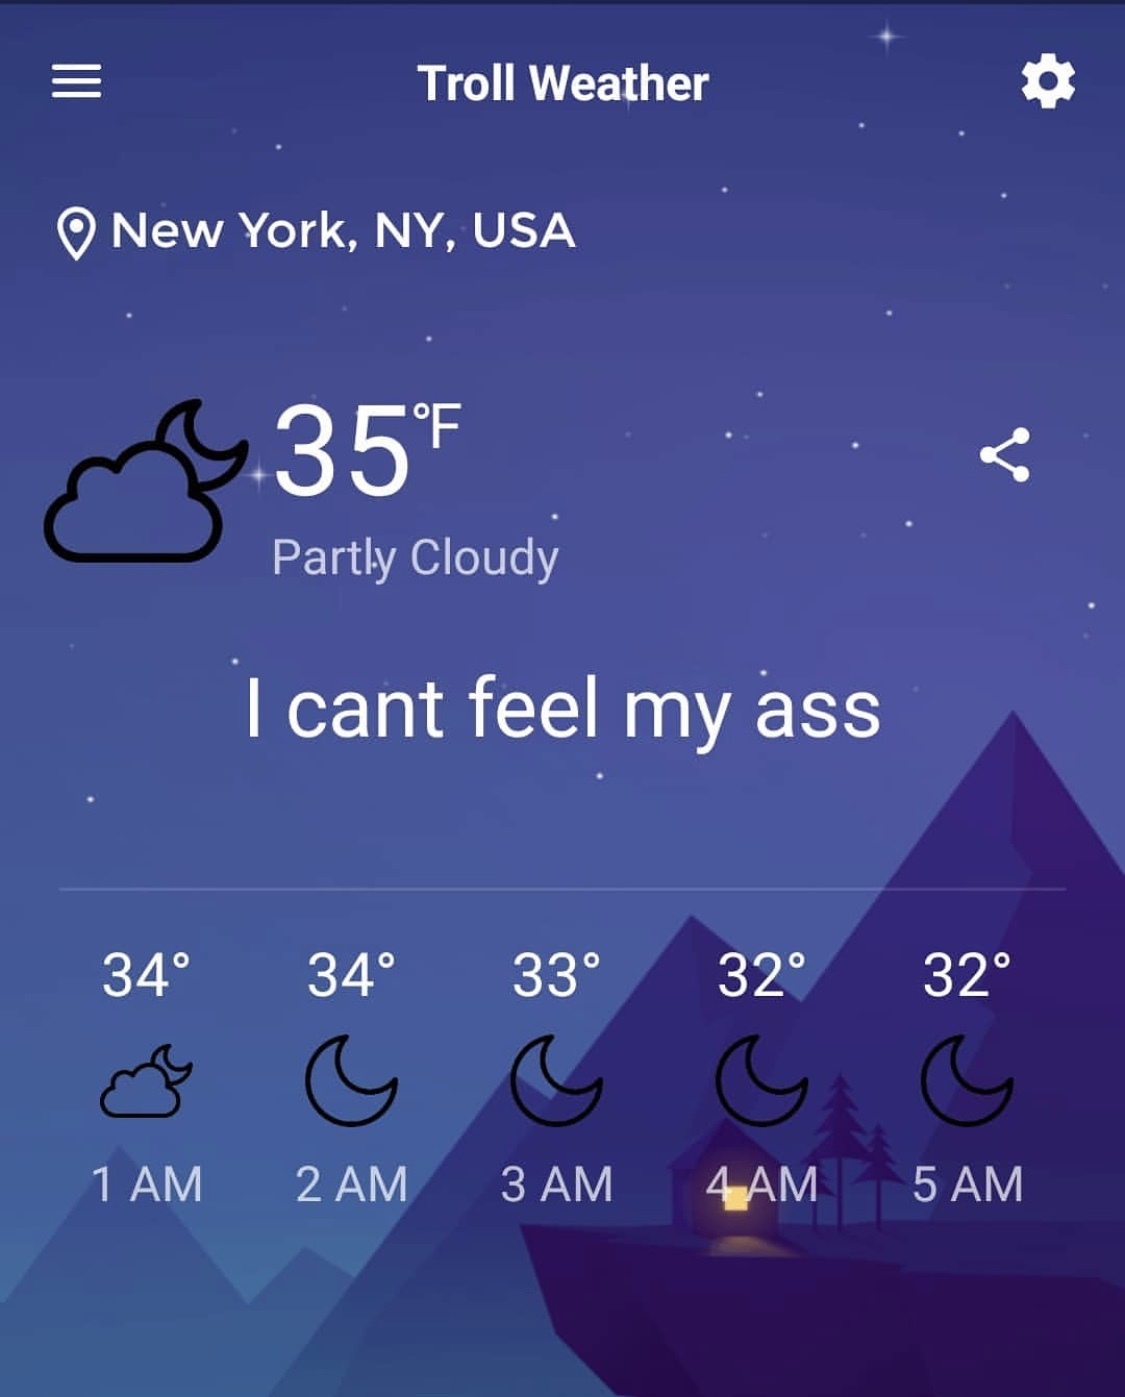 App is called Troll weather - meme